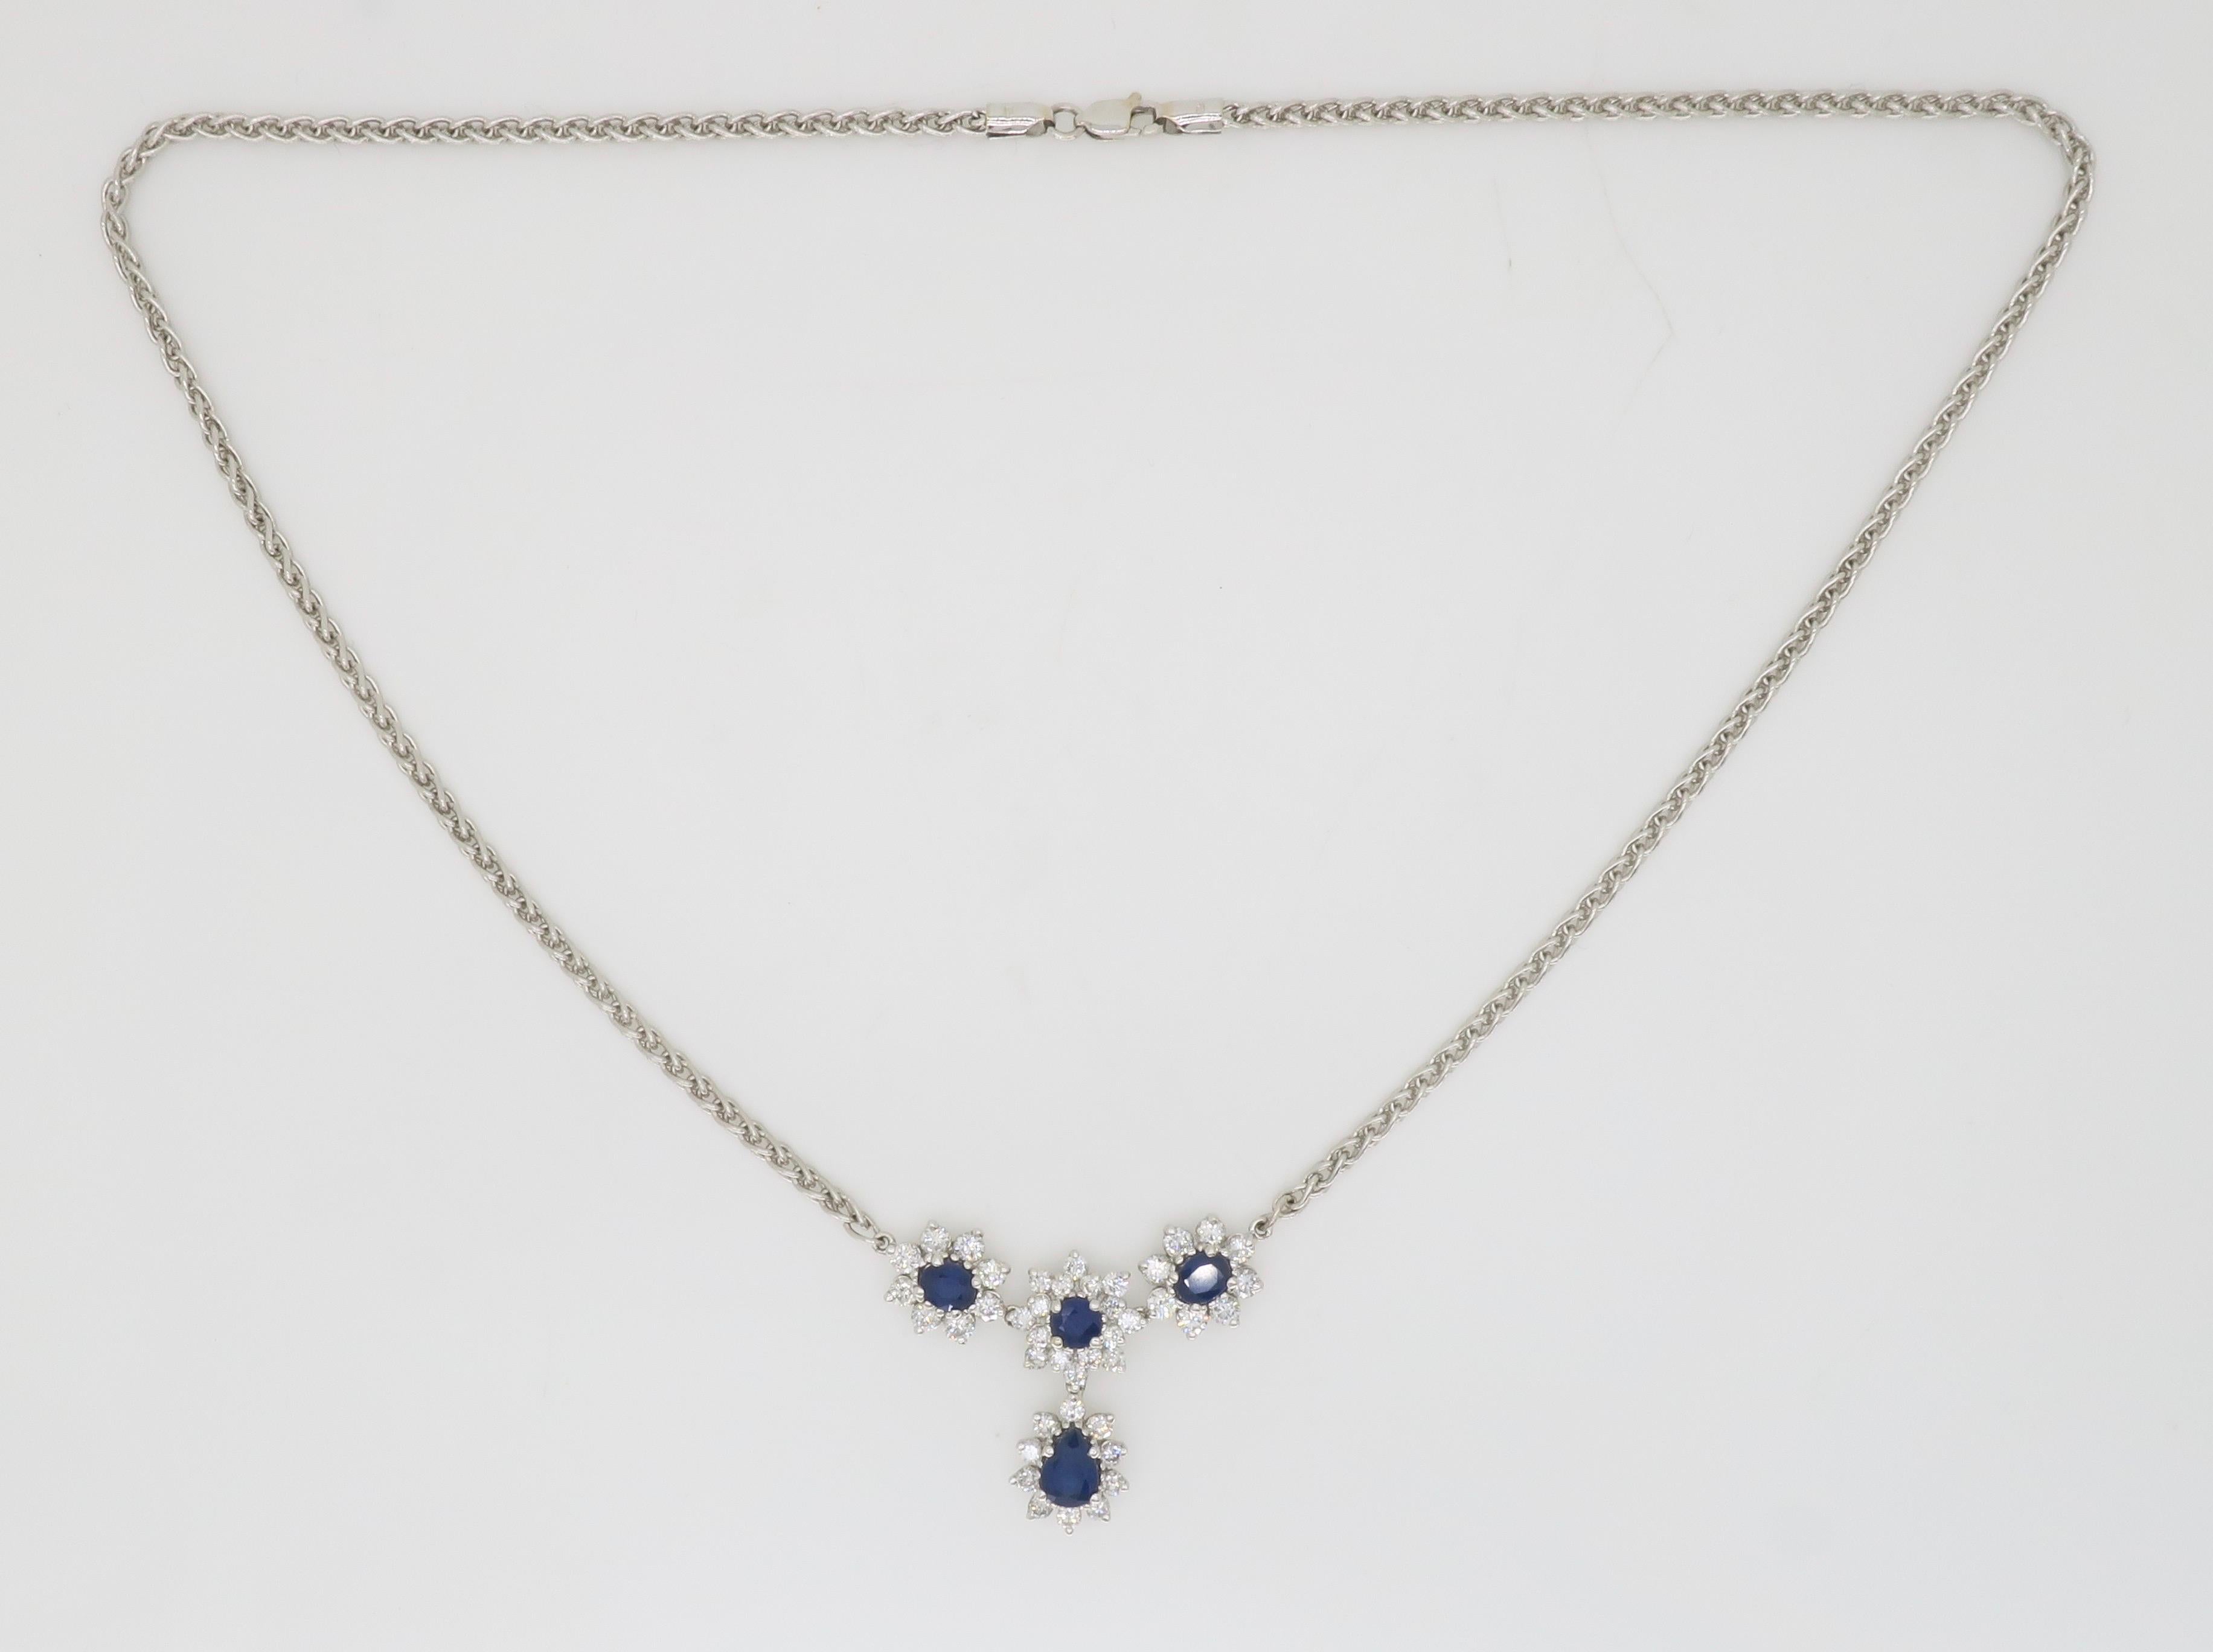 Blue Sapphire & Diamond drop necklace made in 14k white gold. 

Gemstone: Blue Sapphire & Diamond
Diamond Carat Weight: 2.38CTW
Diamond Cut: Round Brilliant Cut Diamonds
Color: Average G-I
Clarity: Average VS-SI
Metal: 14K White Gold 
Length: 18” 